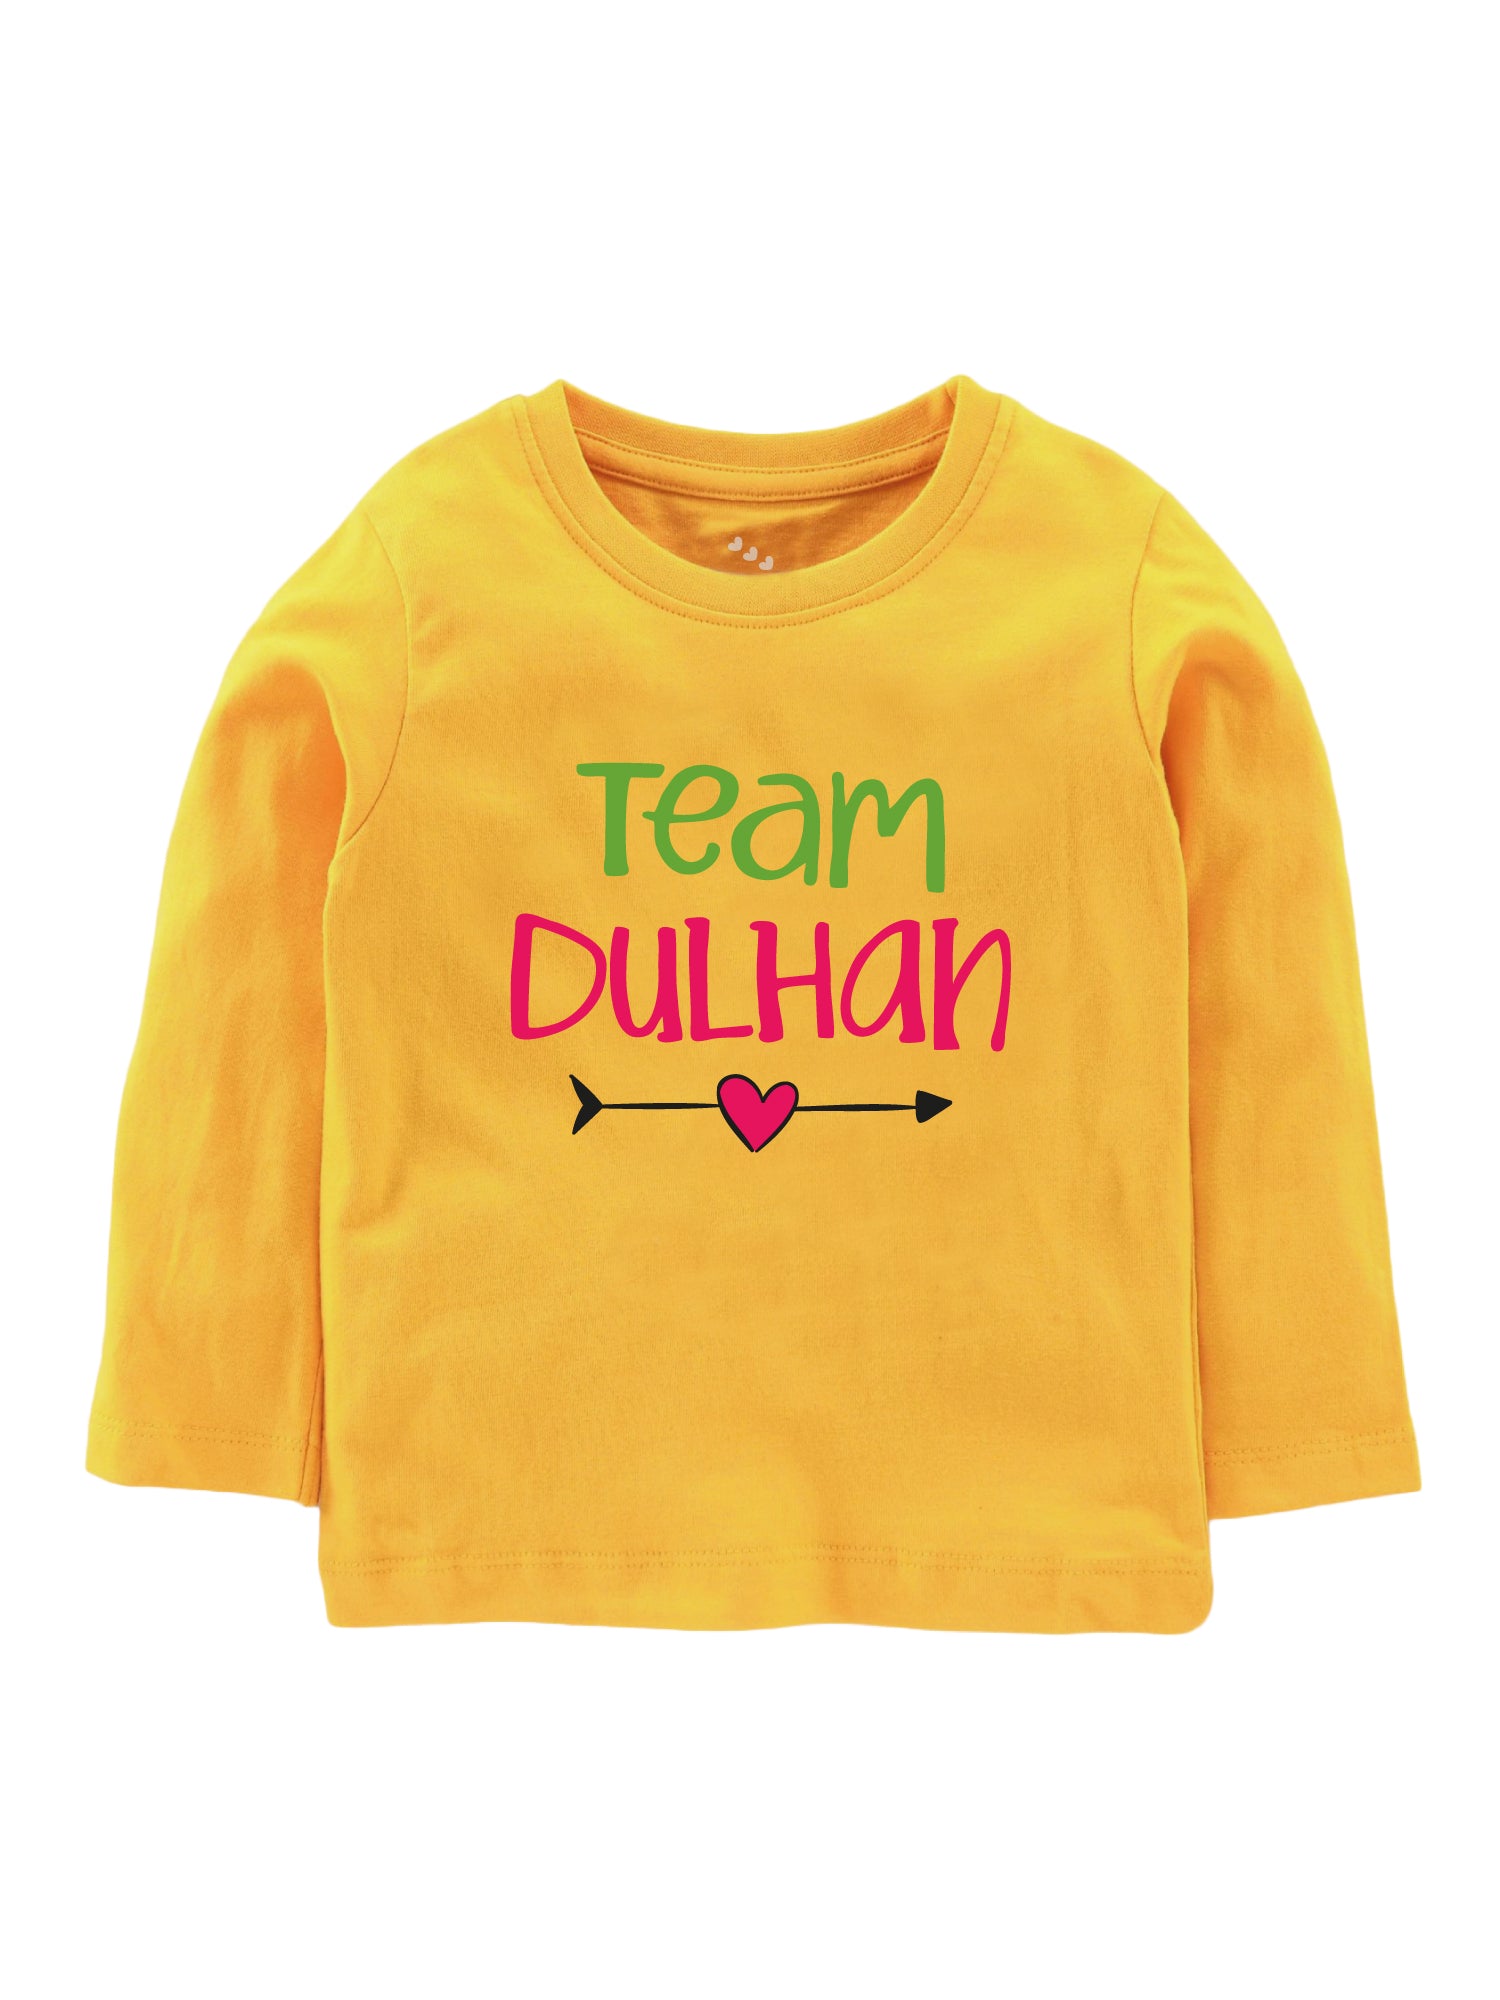 Team Dulhan - Tee